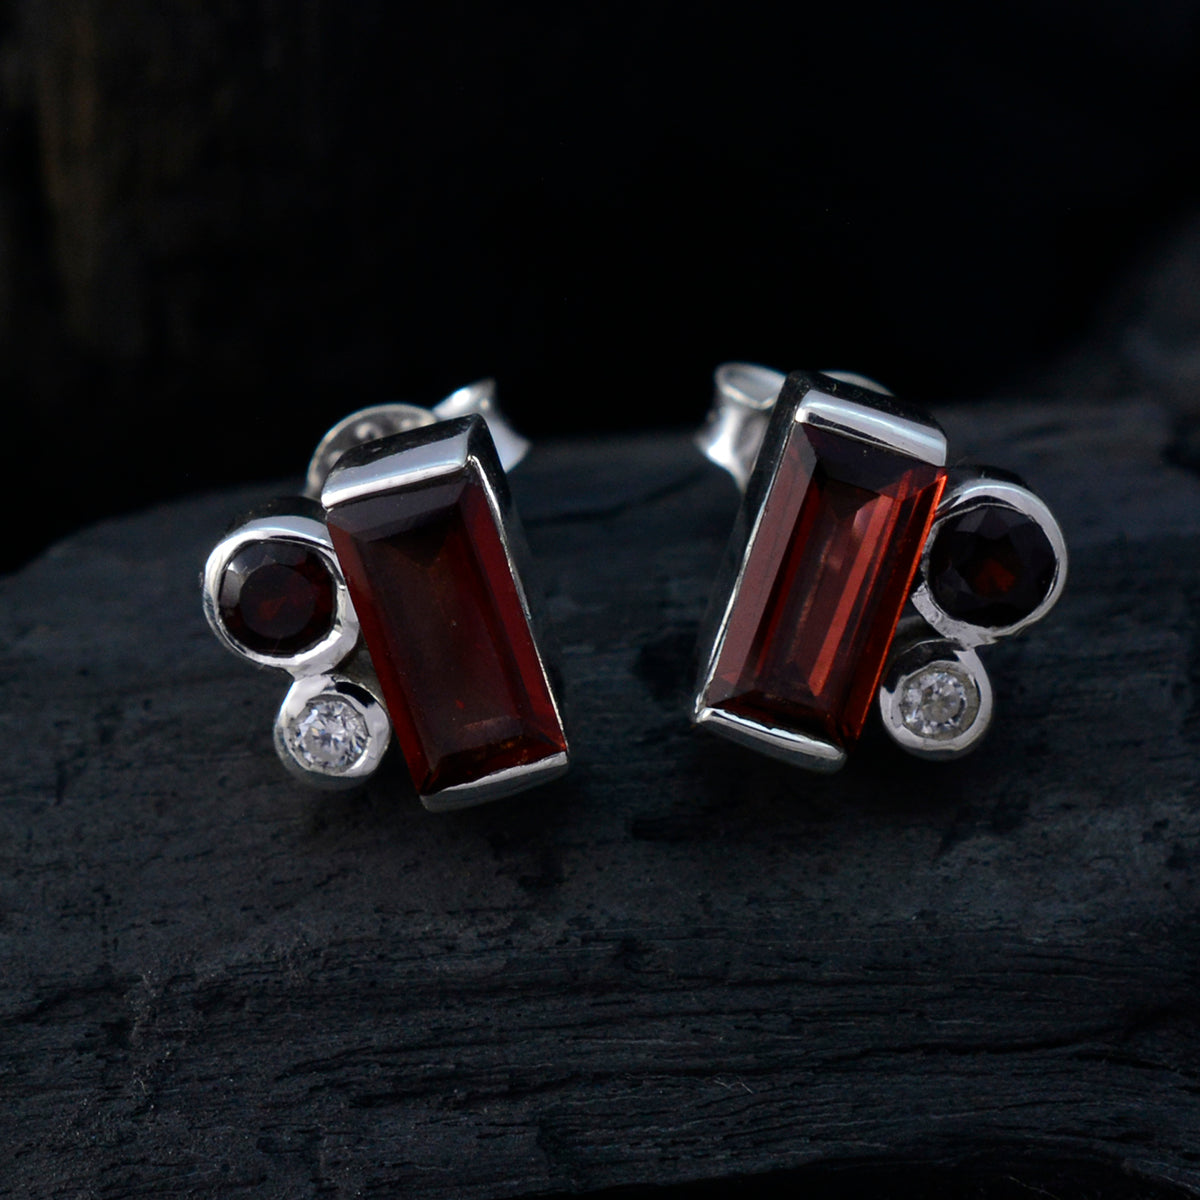 Riyo Real Gemstones multi shape Faceted Red Garnet Silver Earrings gift for thanks giving